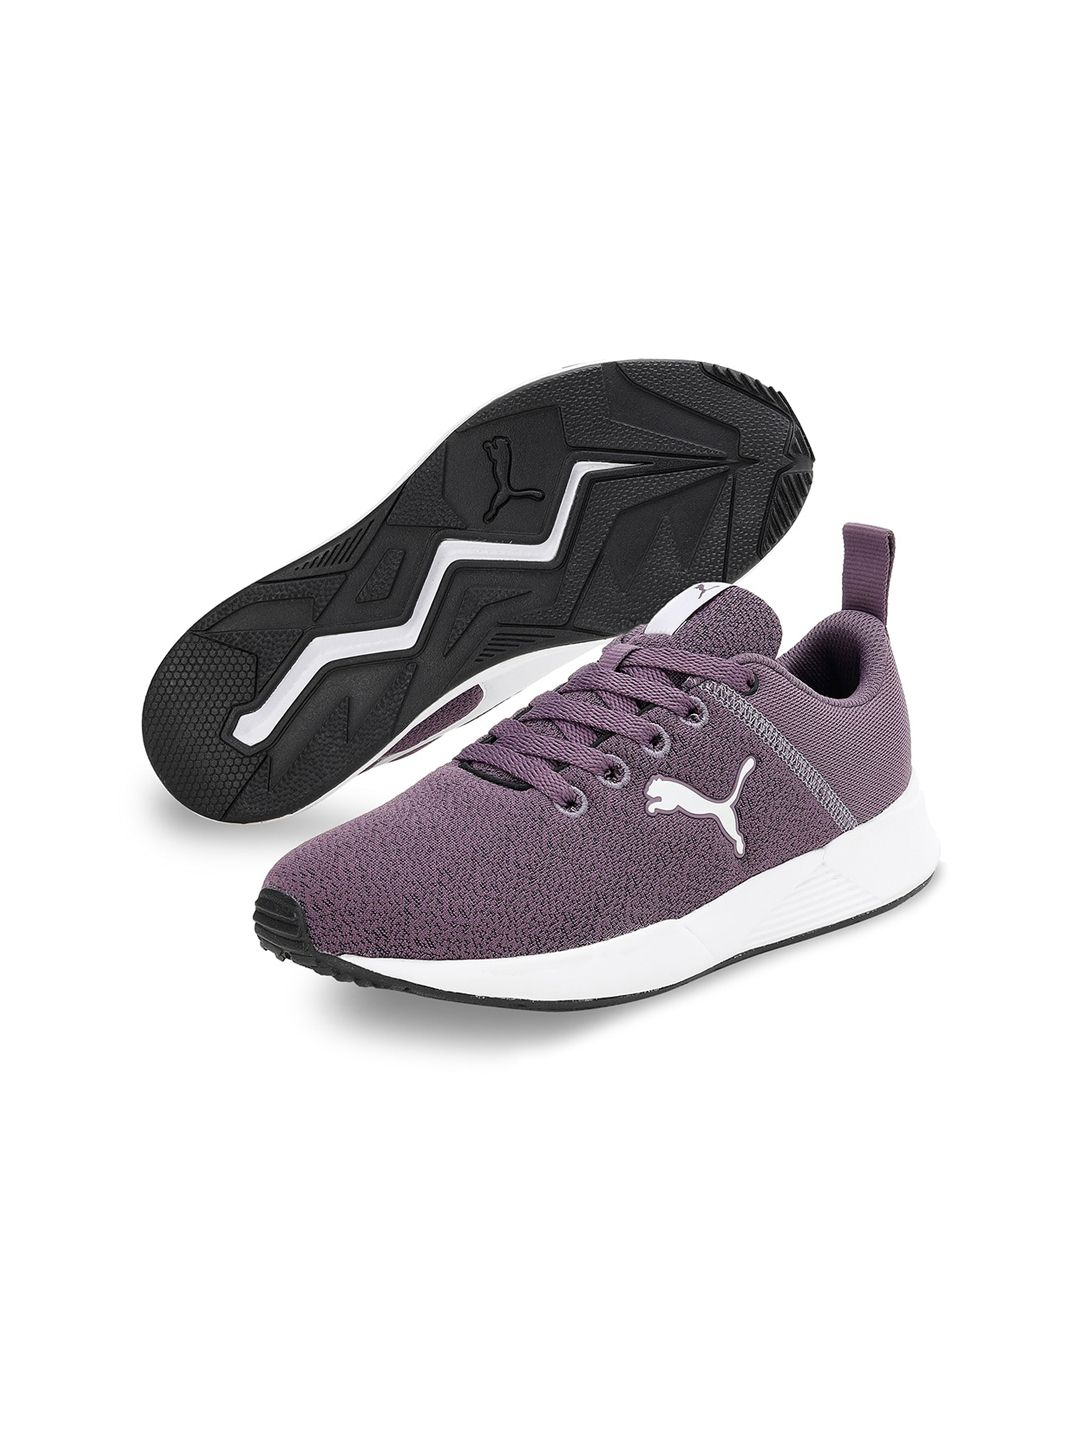 Puma Unisex Purple Woven Design Truffle Sneakers Price in India